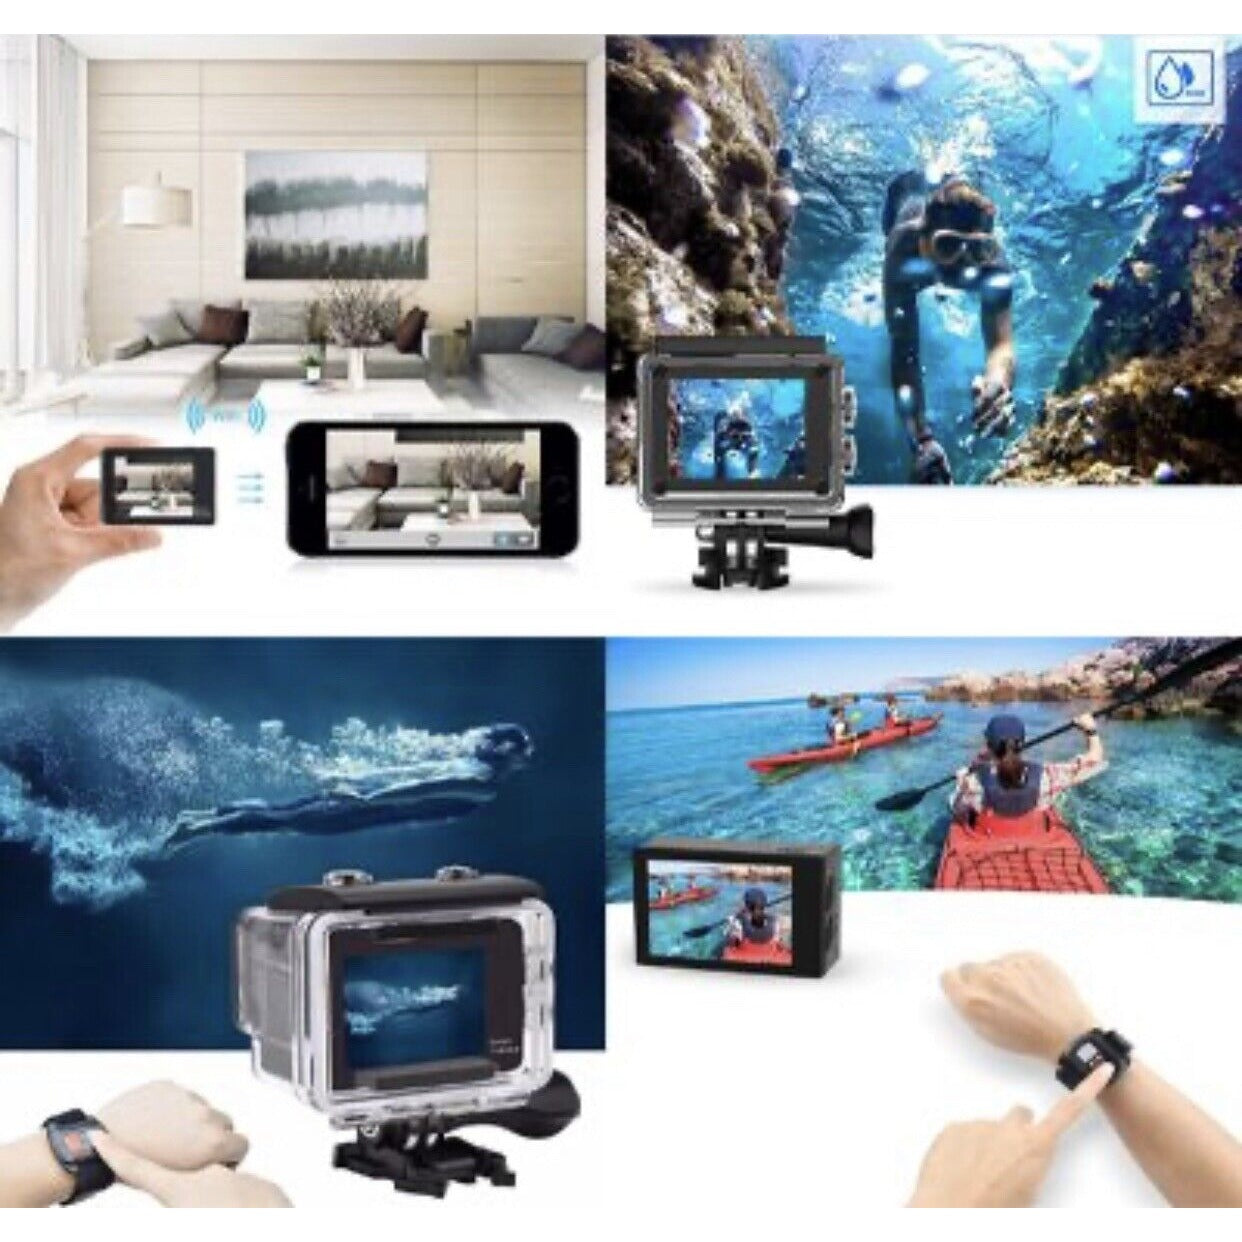 4K Waterproof All Digital WiFi Video Camera + Remote And Accessories